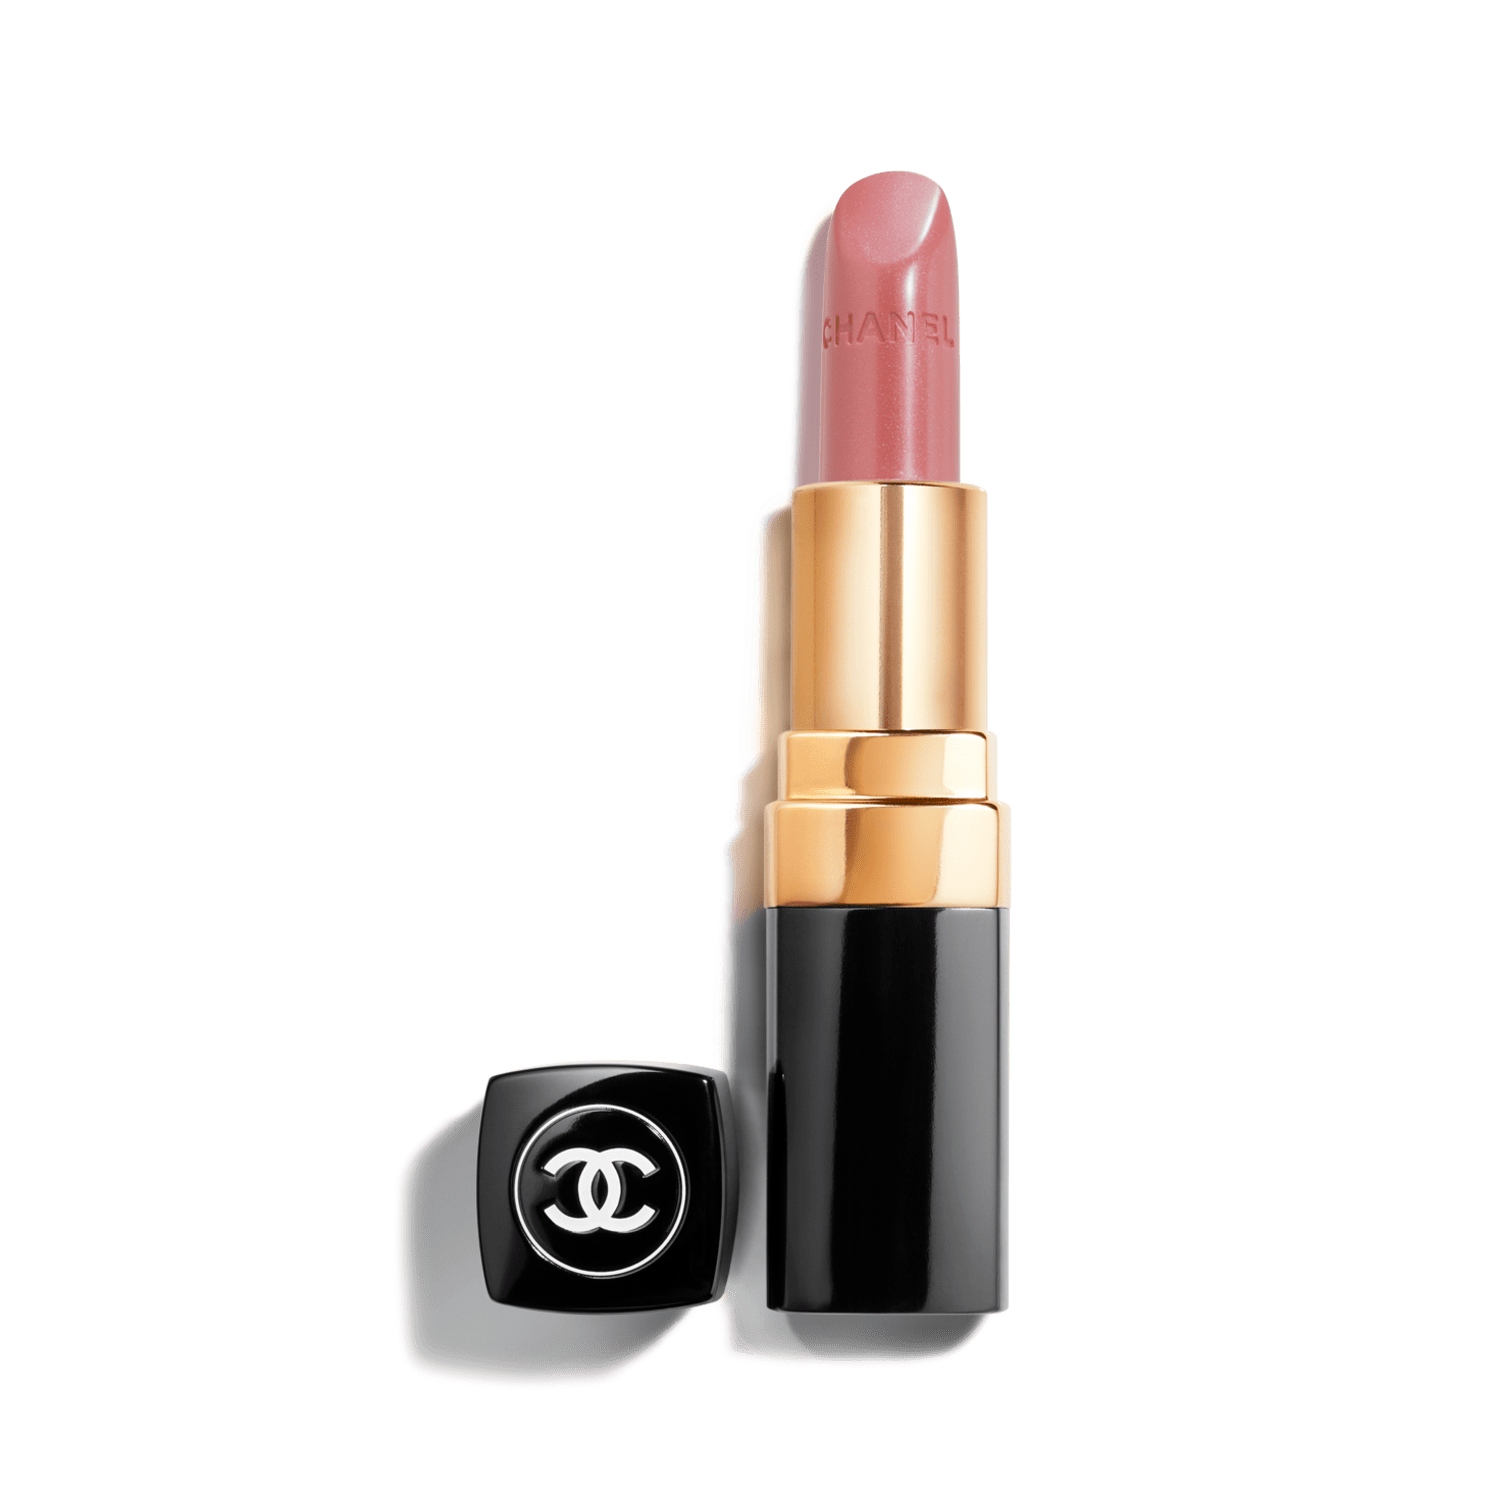 chanel lipstick best seller